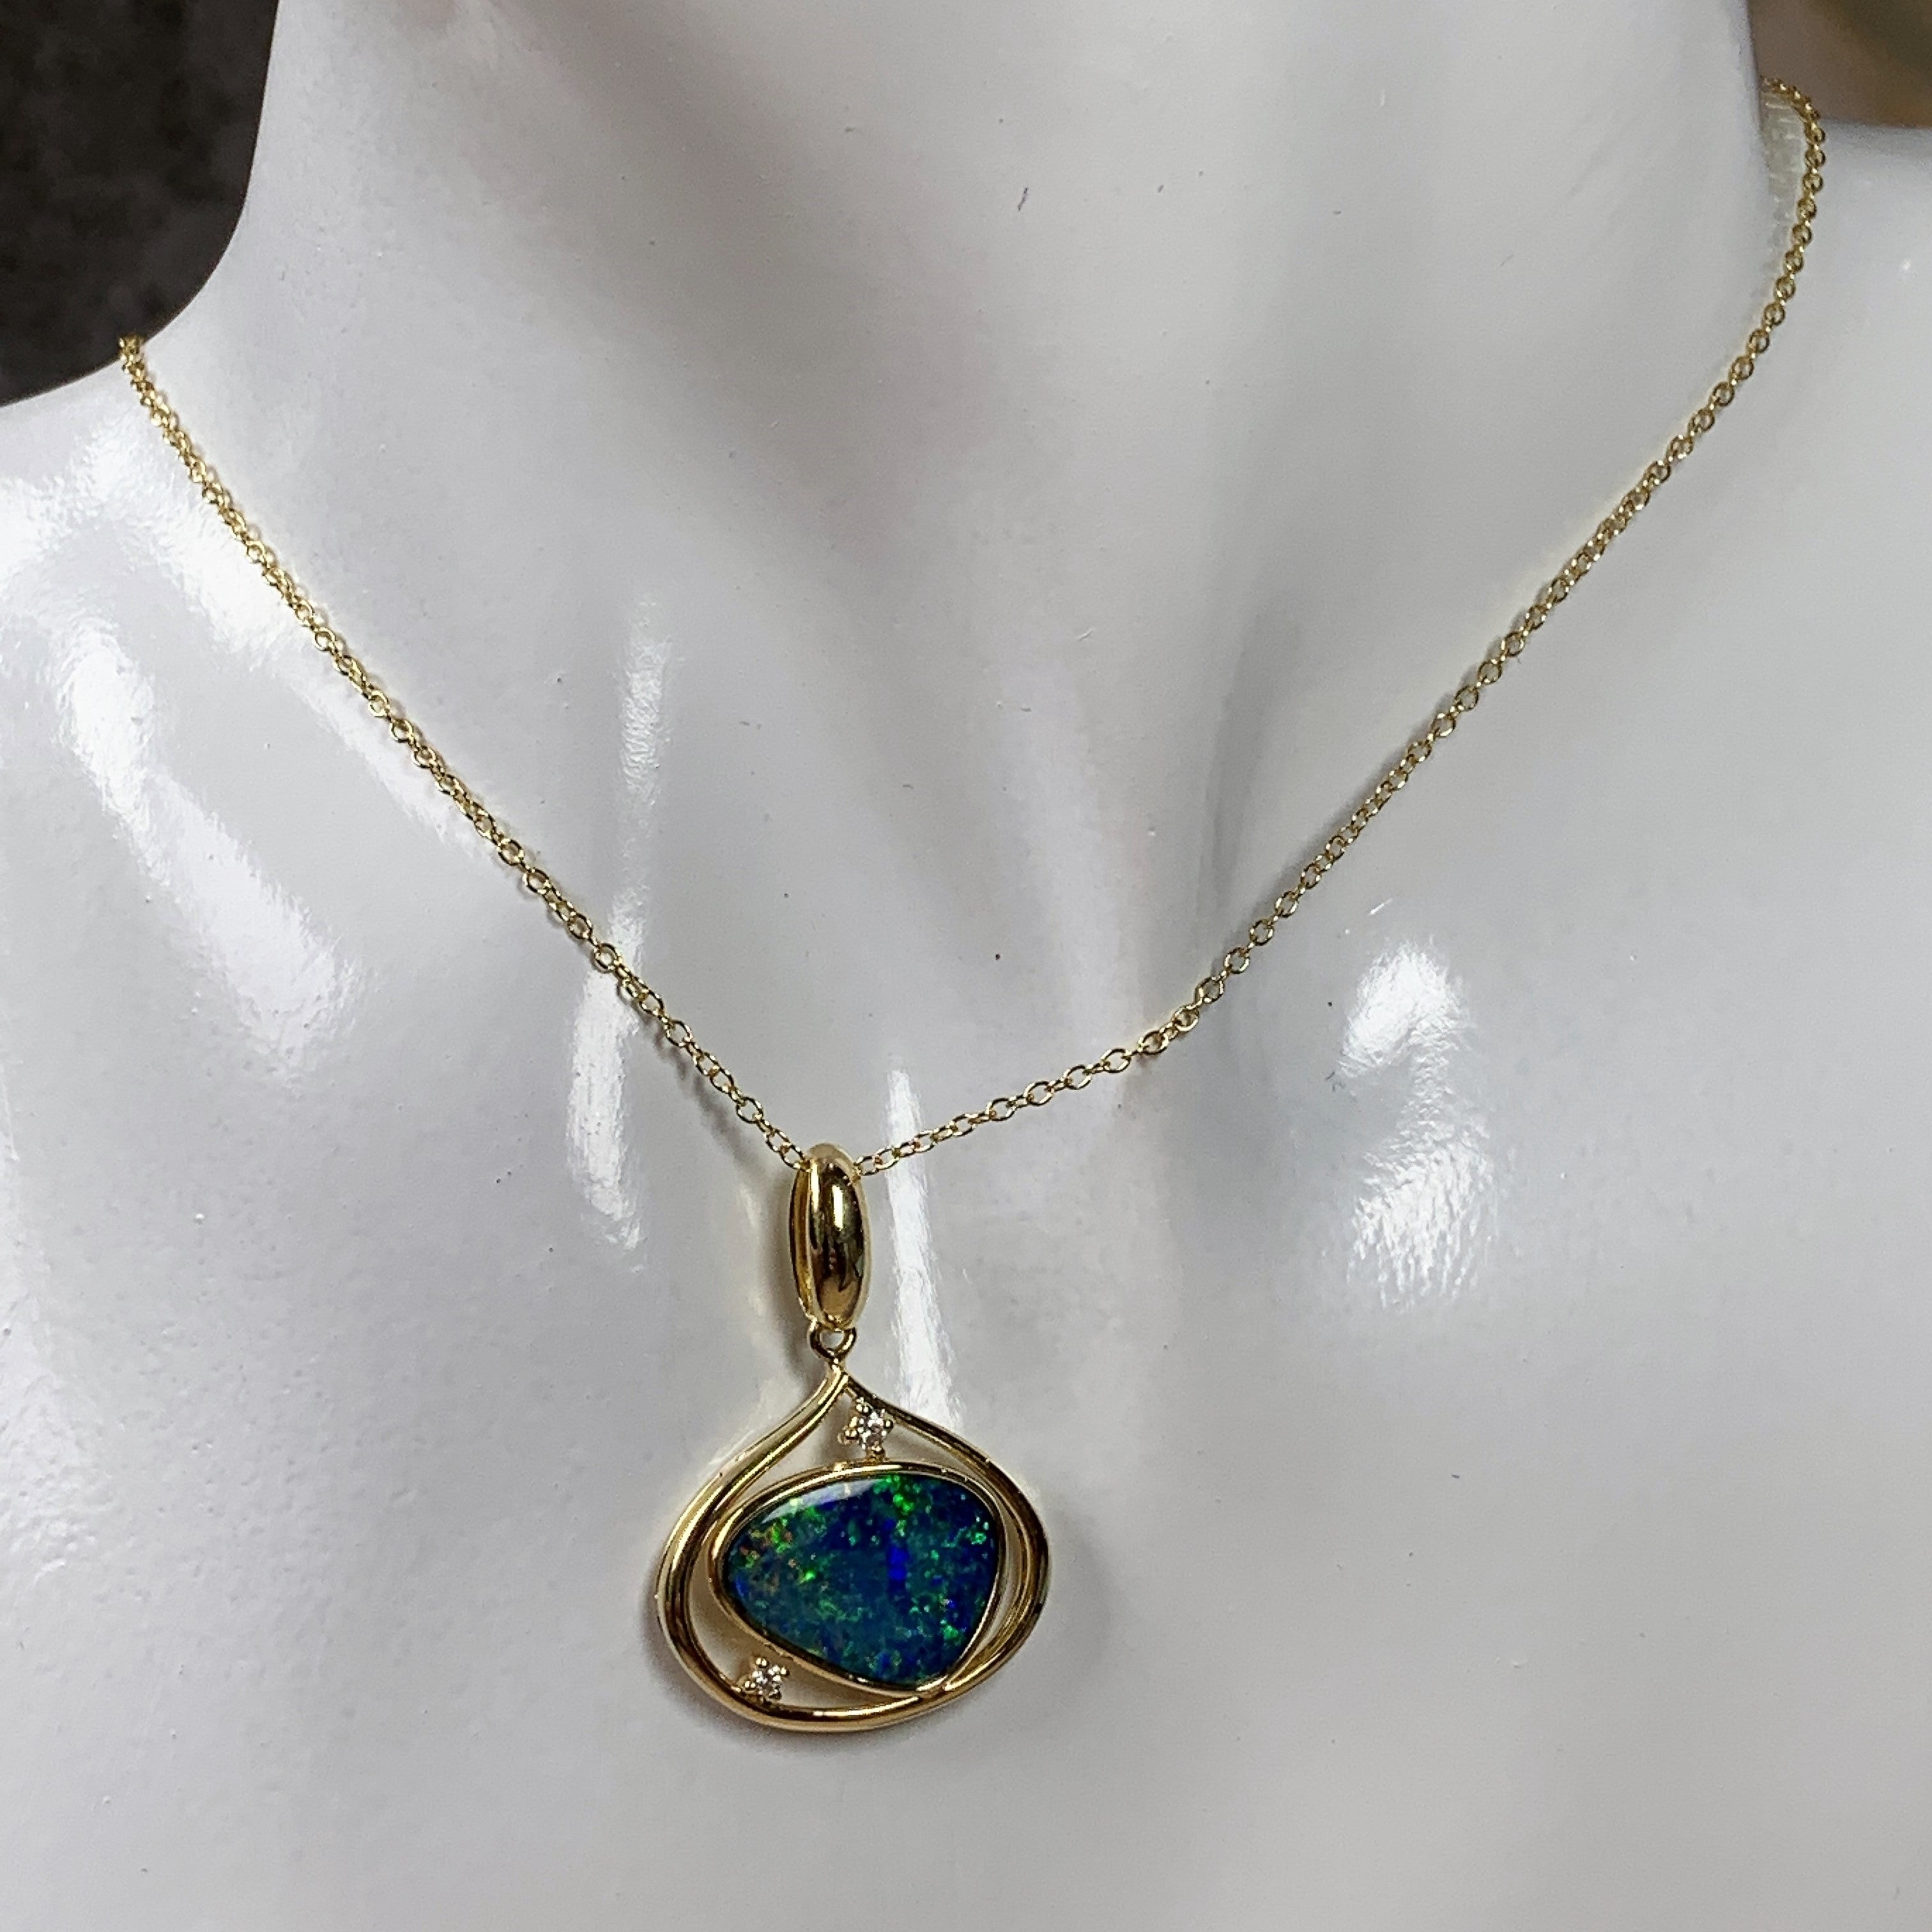 Yellow Gold plated silver Opal 14x10mm pendant - Masterpiece Jewellery Opal & Gems Sydney Australia | Online Shop